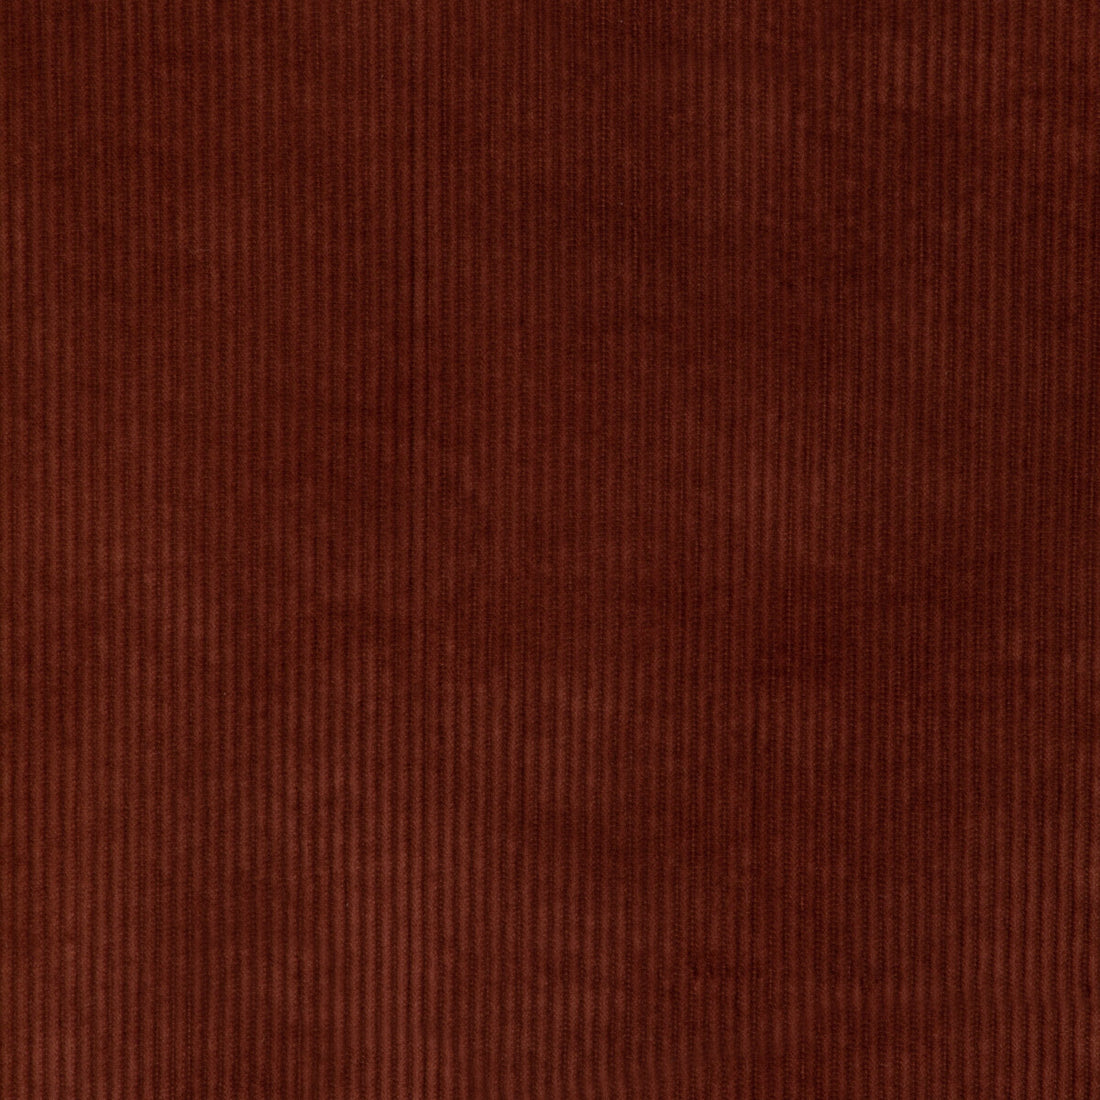 Kravet Smart fabric in 37006-9 color - pattern 37006.9.0 - by Kravet Smart